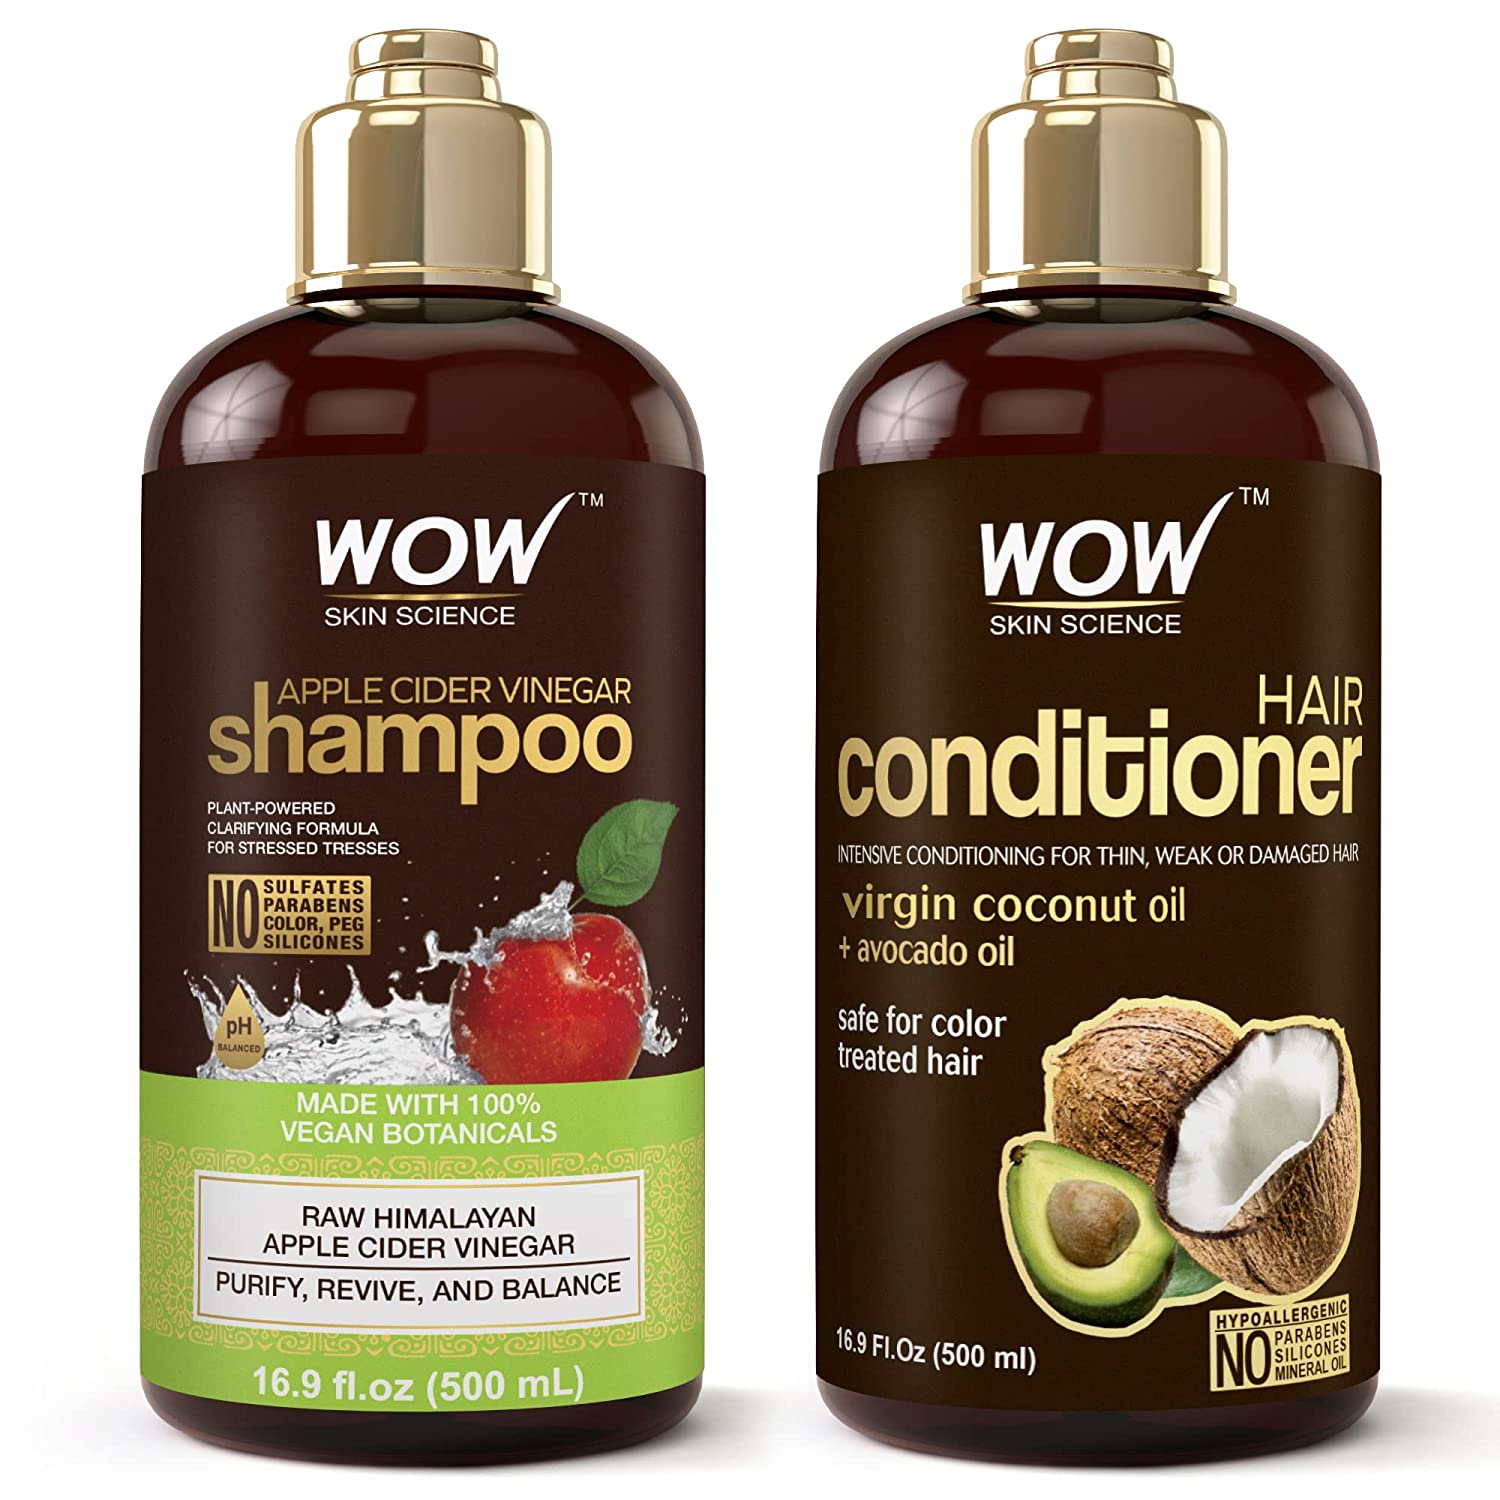  3. WOW Apple Cider Vinegar Shampoo is the best for scalp health. 